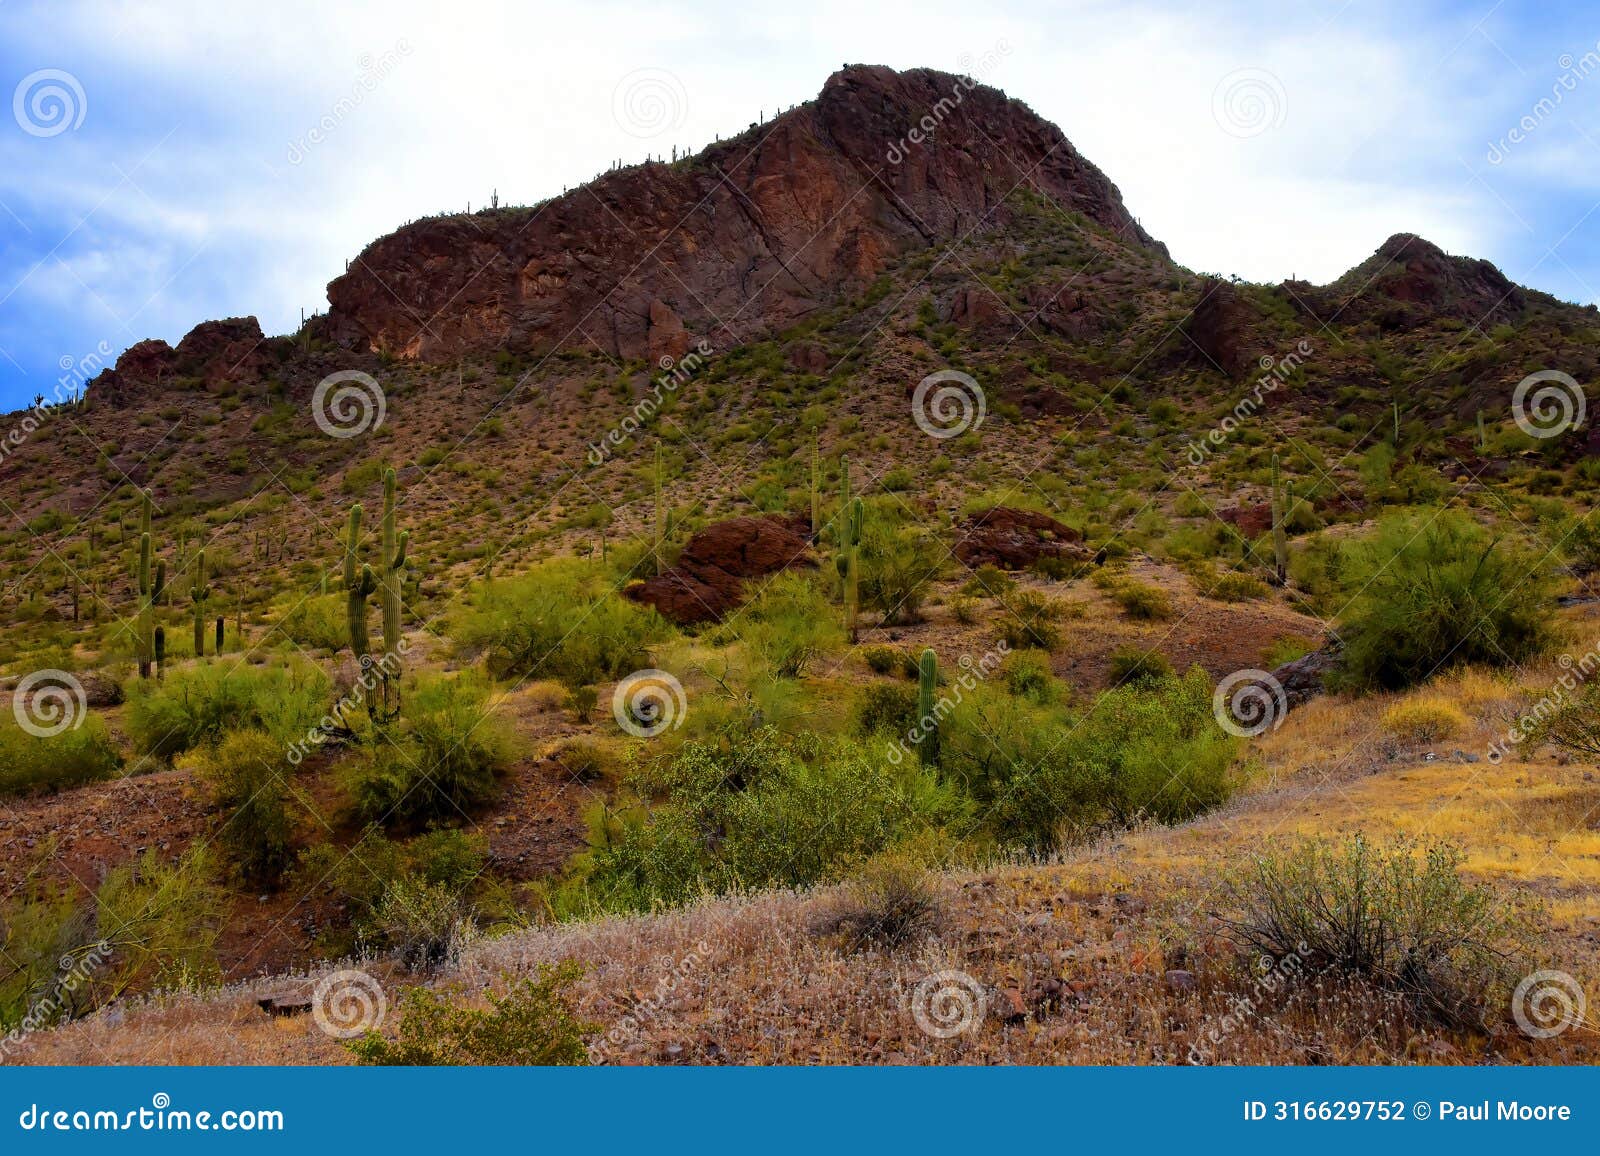 sonora desert arizona picacho peak state park